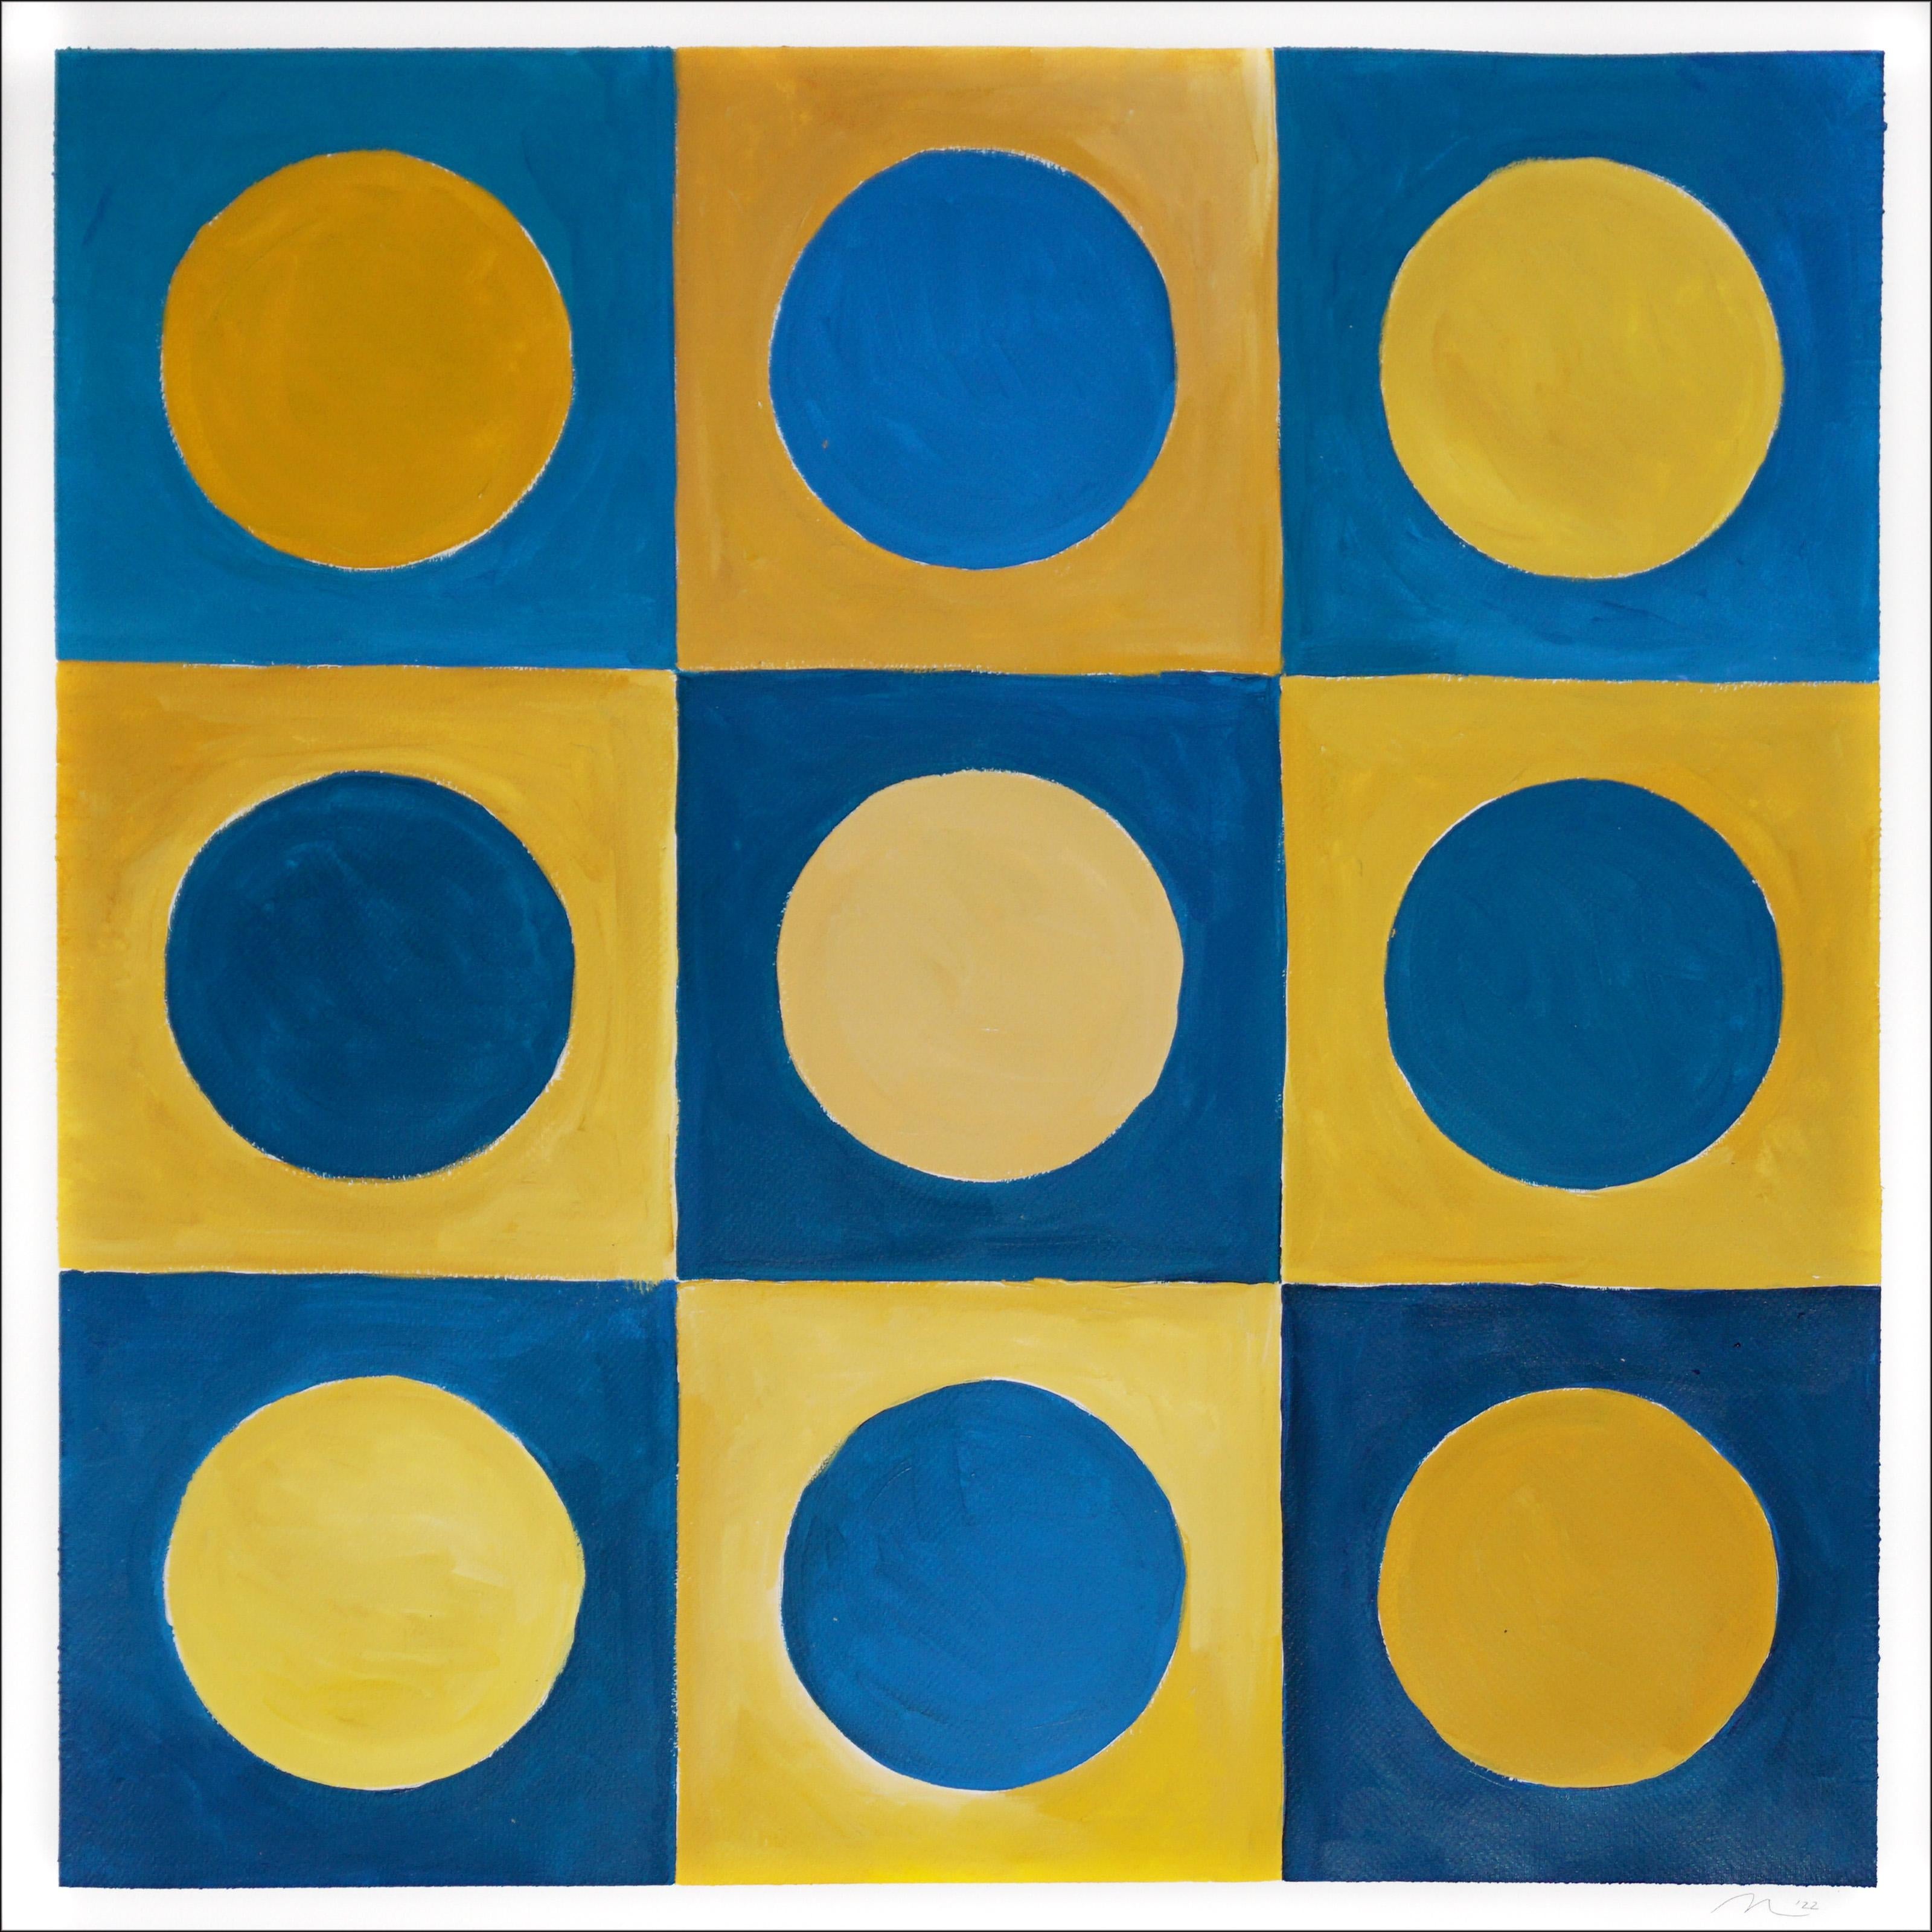 Natalia Roman Abstract Painting – Blassblaue Punkte, Primärgeometrie Gitter, Gelb und Blau, Komplementärtöne 